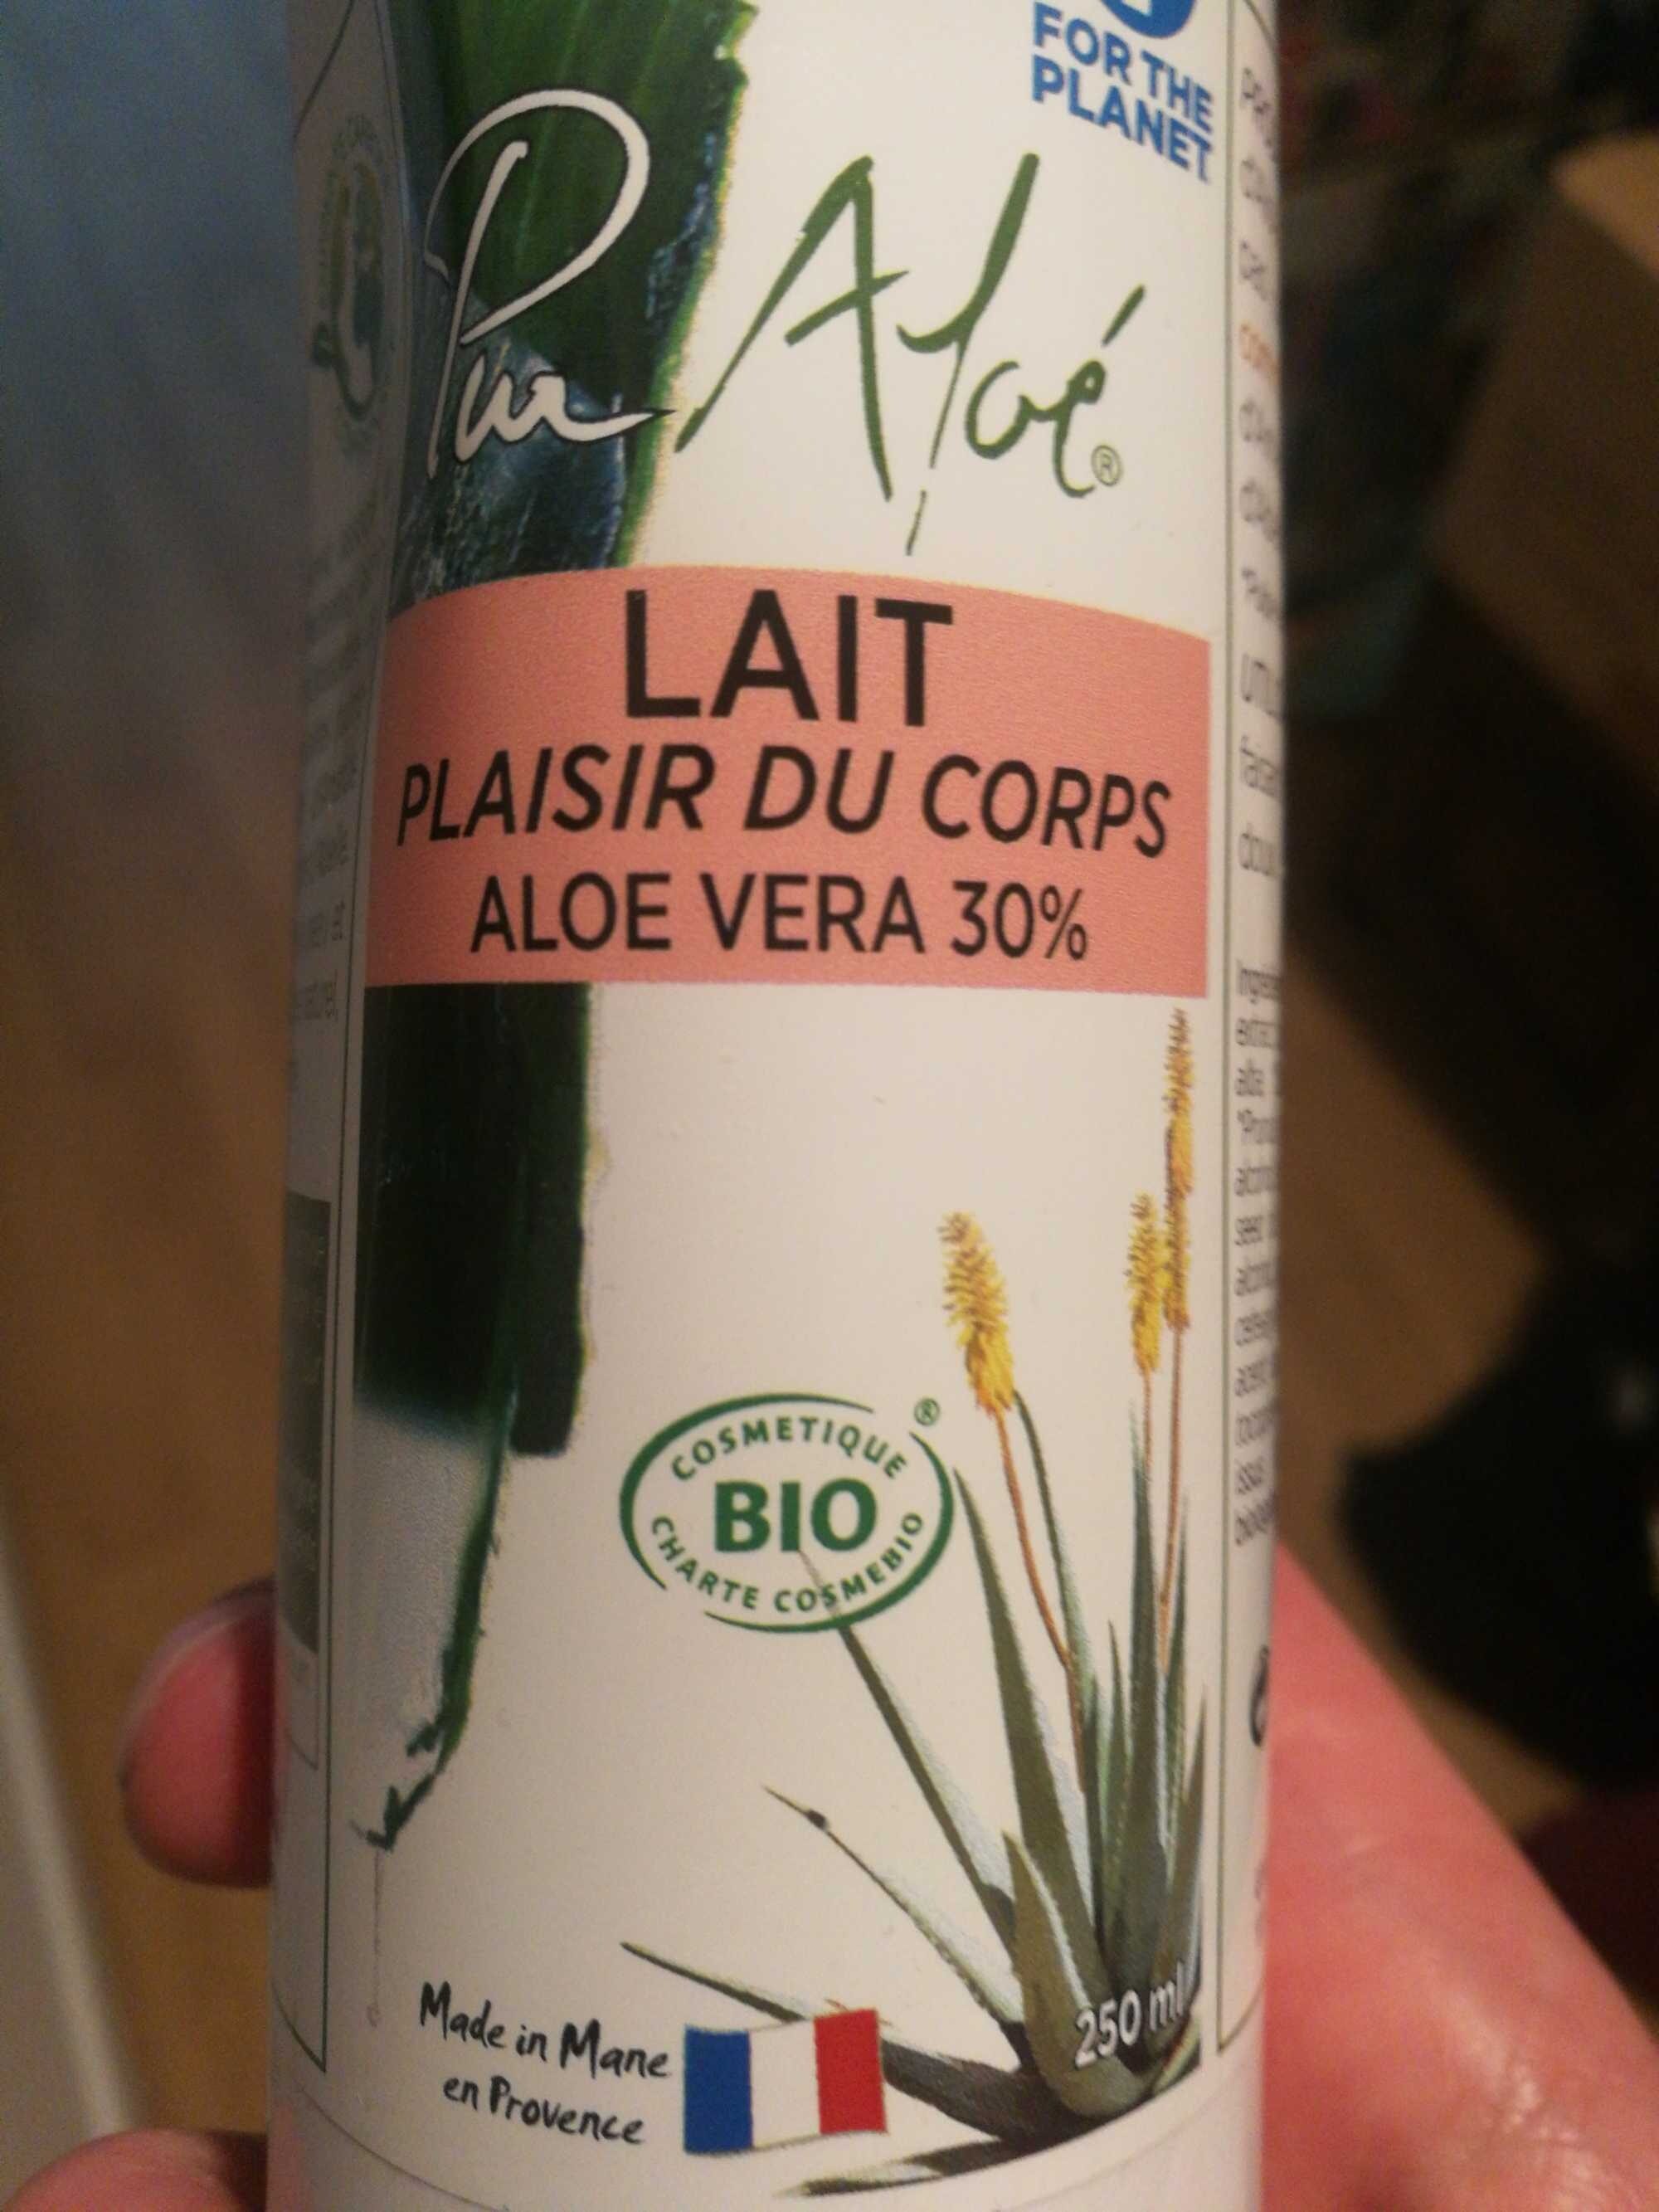 Lait plaisir du corps Aloe Vera 30% - Produto - fr